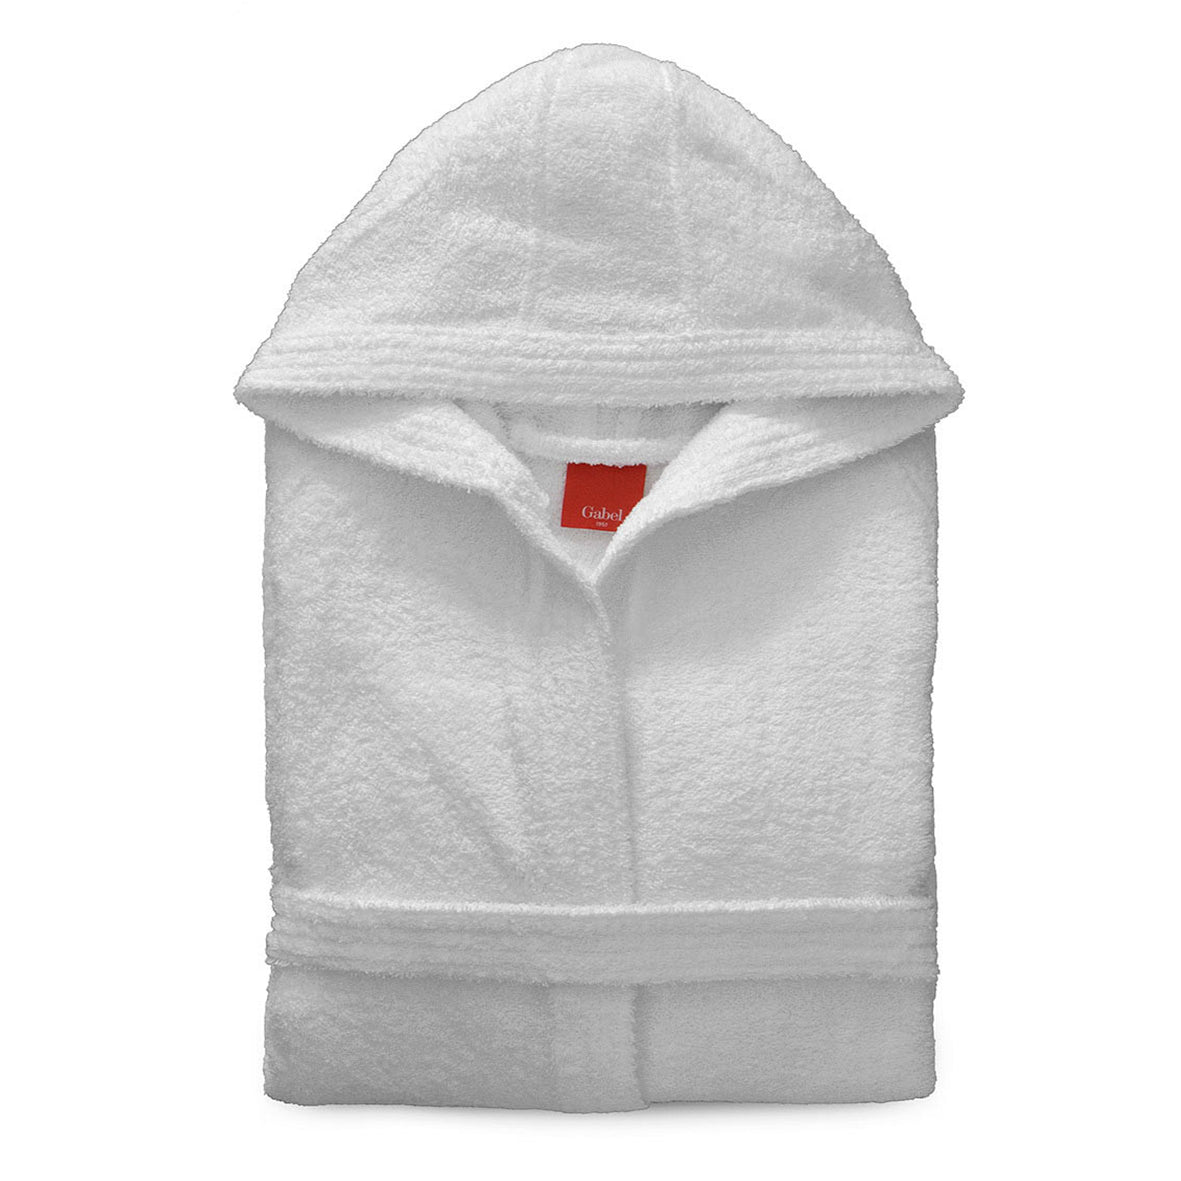 Solid color bathrobe &amp; co GABEL 100% cotton